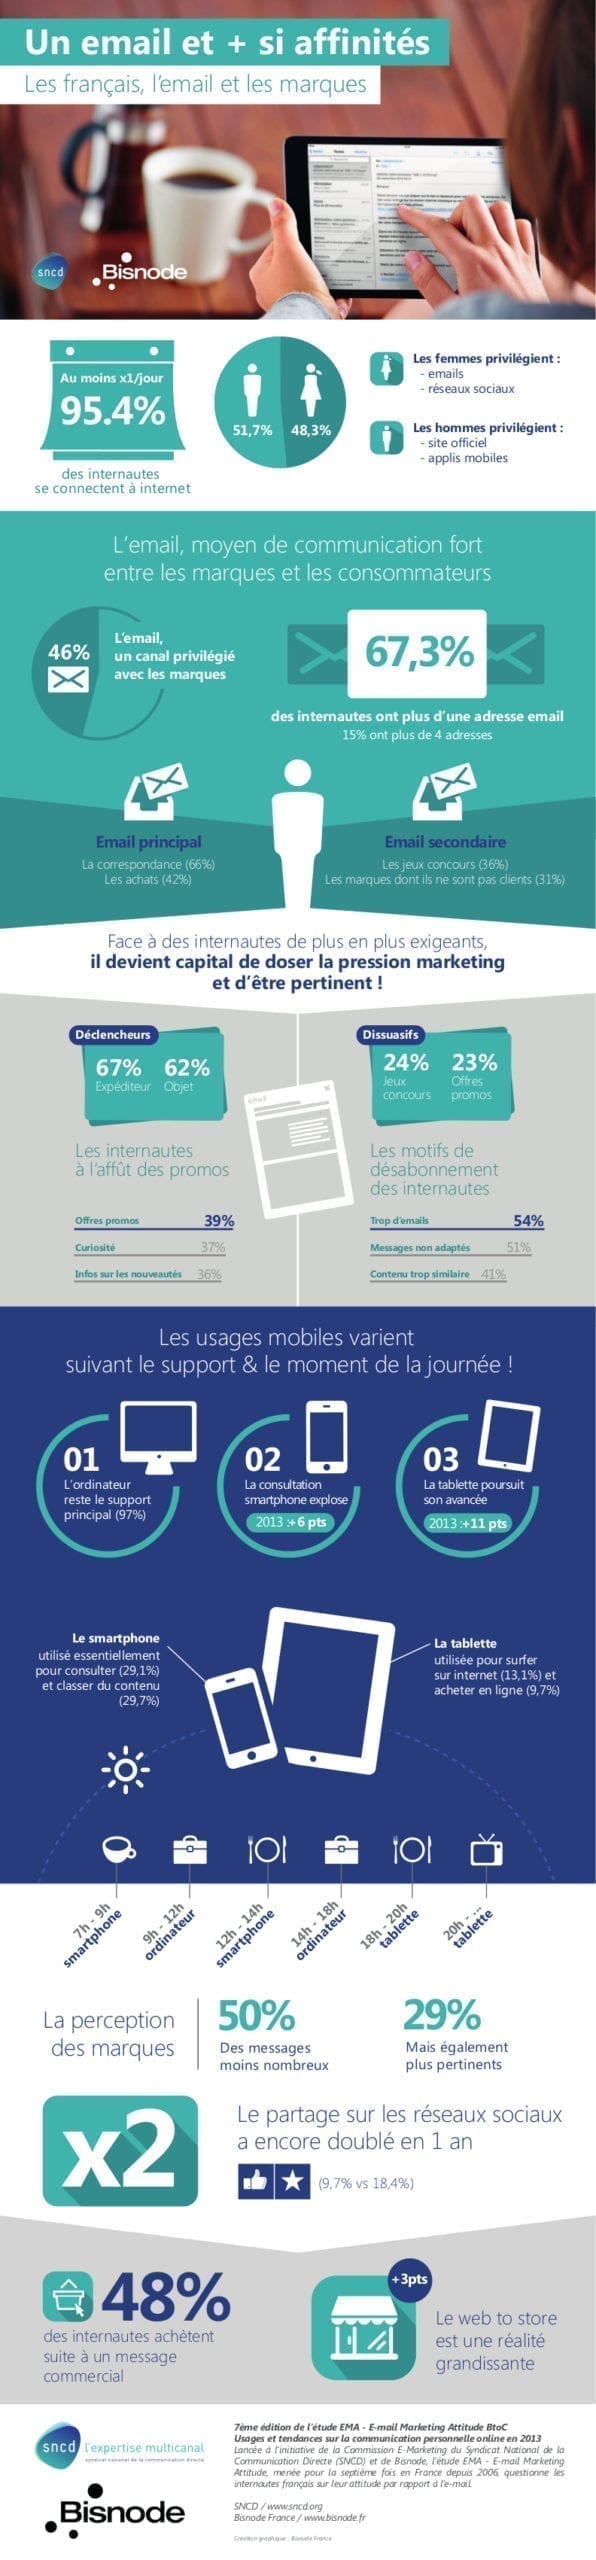 infographie-Email-Marketing-Attitude-BtoC-SNCD-2013